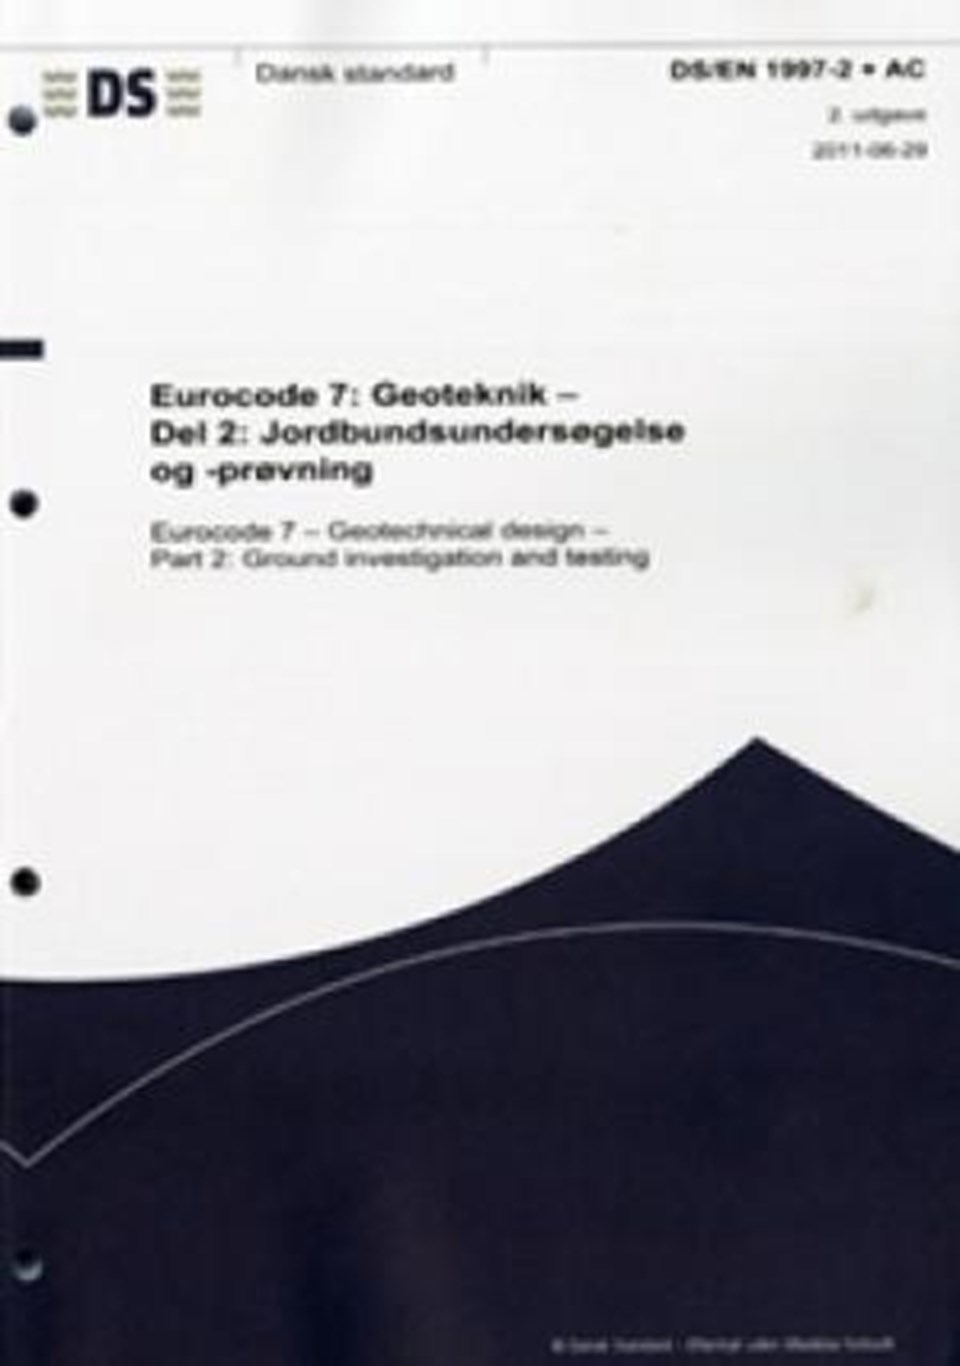 Eurocode 7:Geoteknik, Del 2 + AC